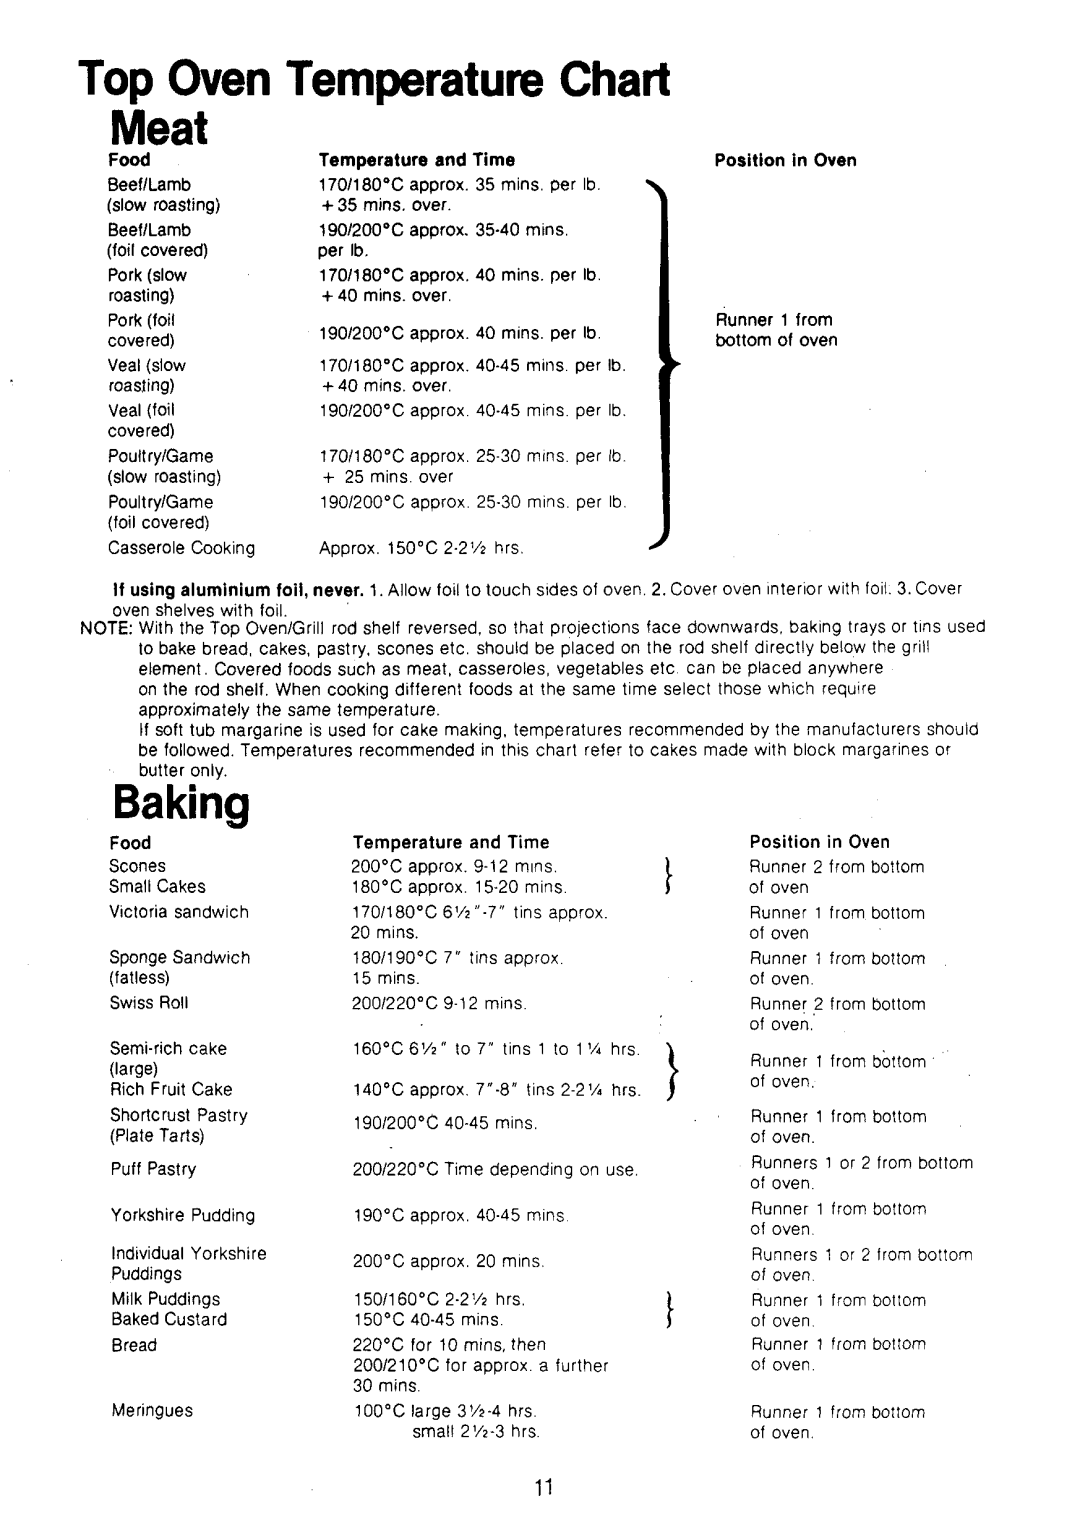 Electrolux CF463 manual 